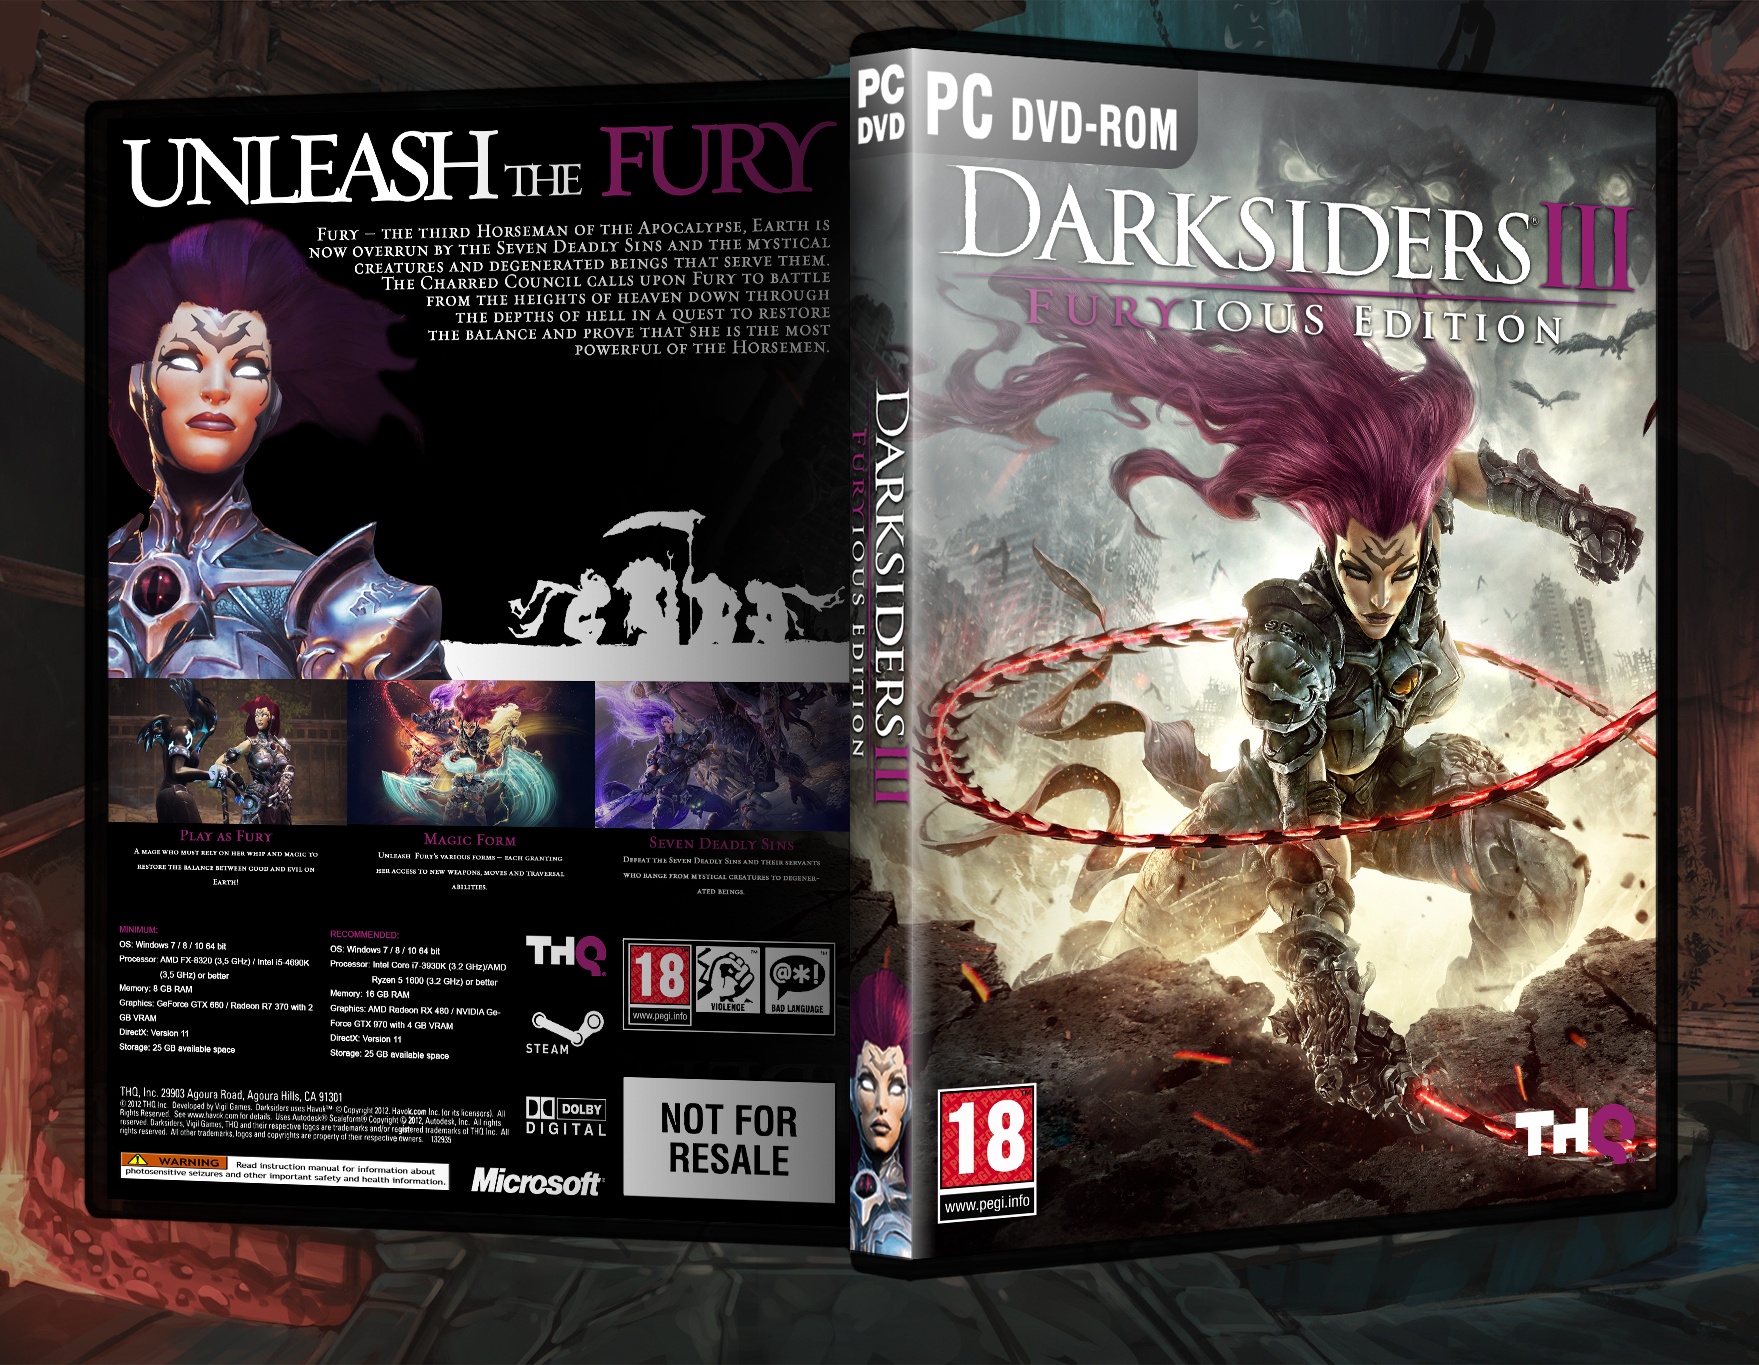 Darksiders III Furyious Edition box cover